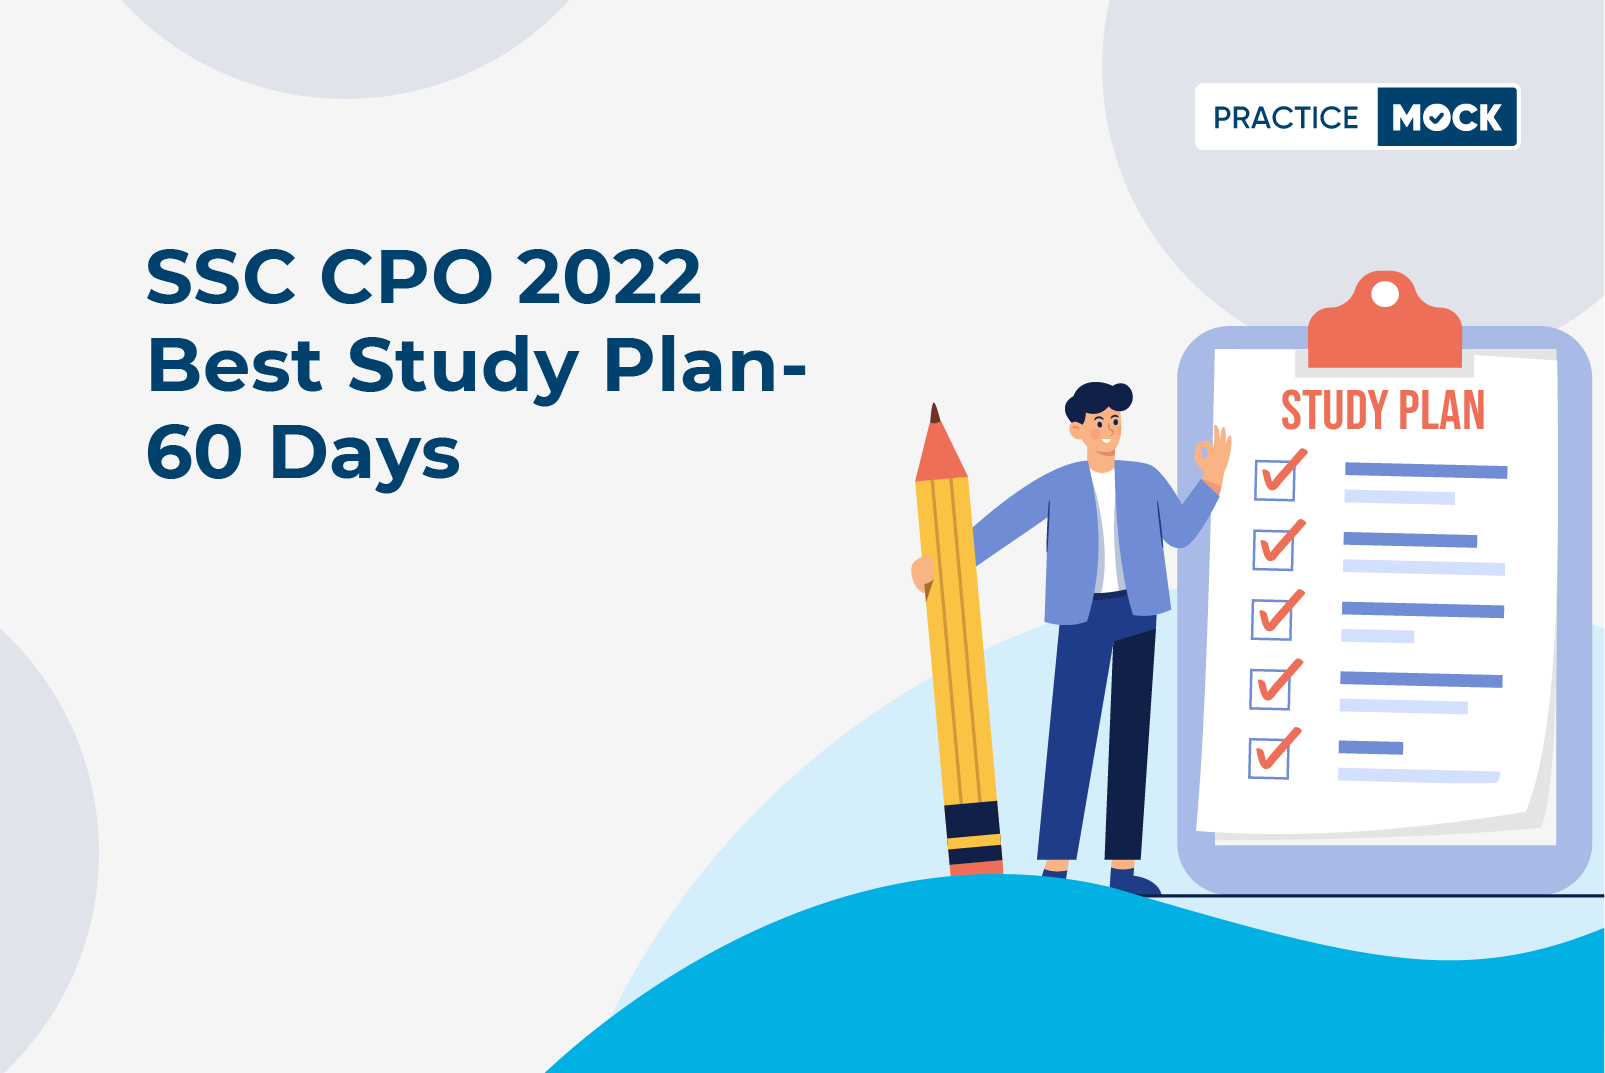 SSC CPO 2022 Best Study Plan 60 Days PracticeMock